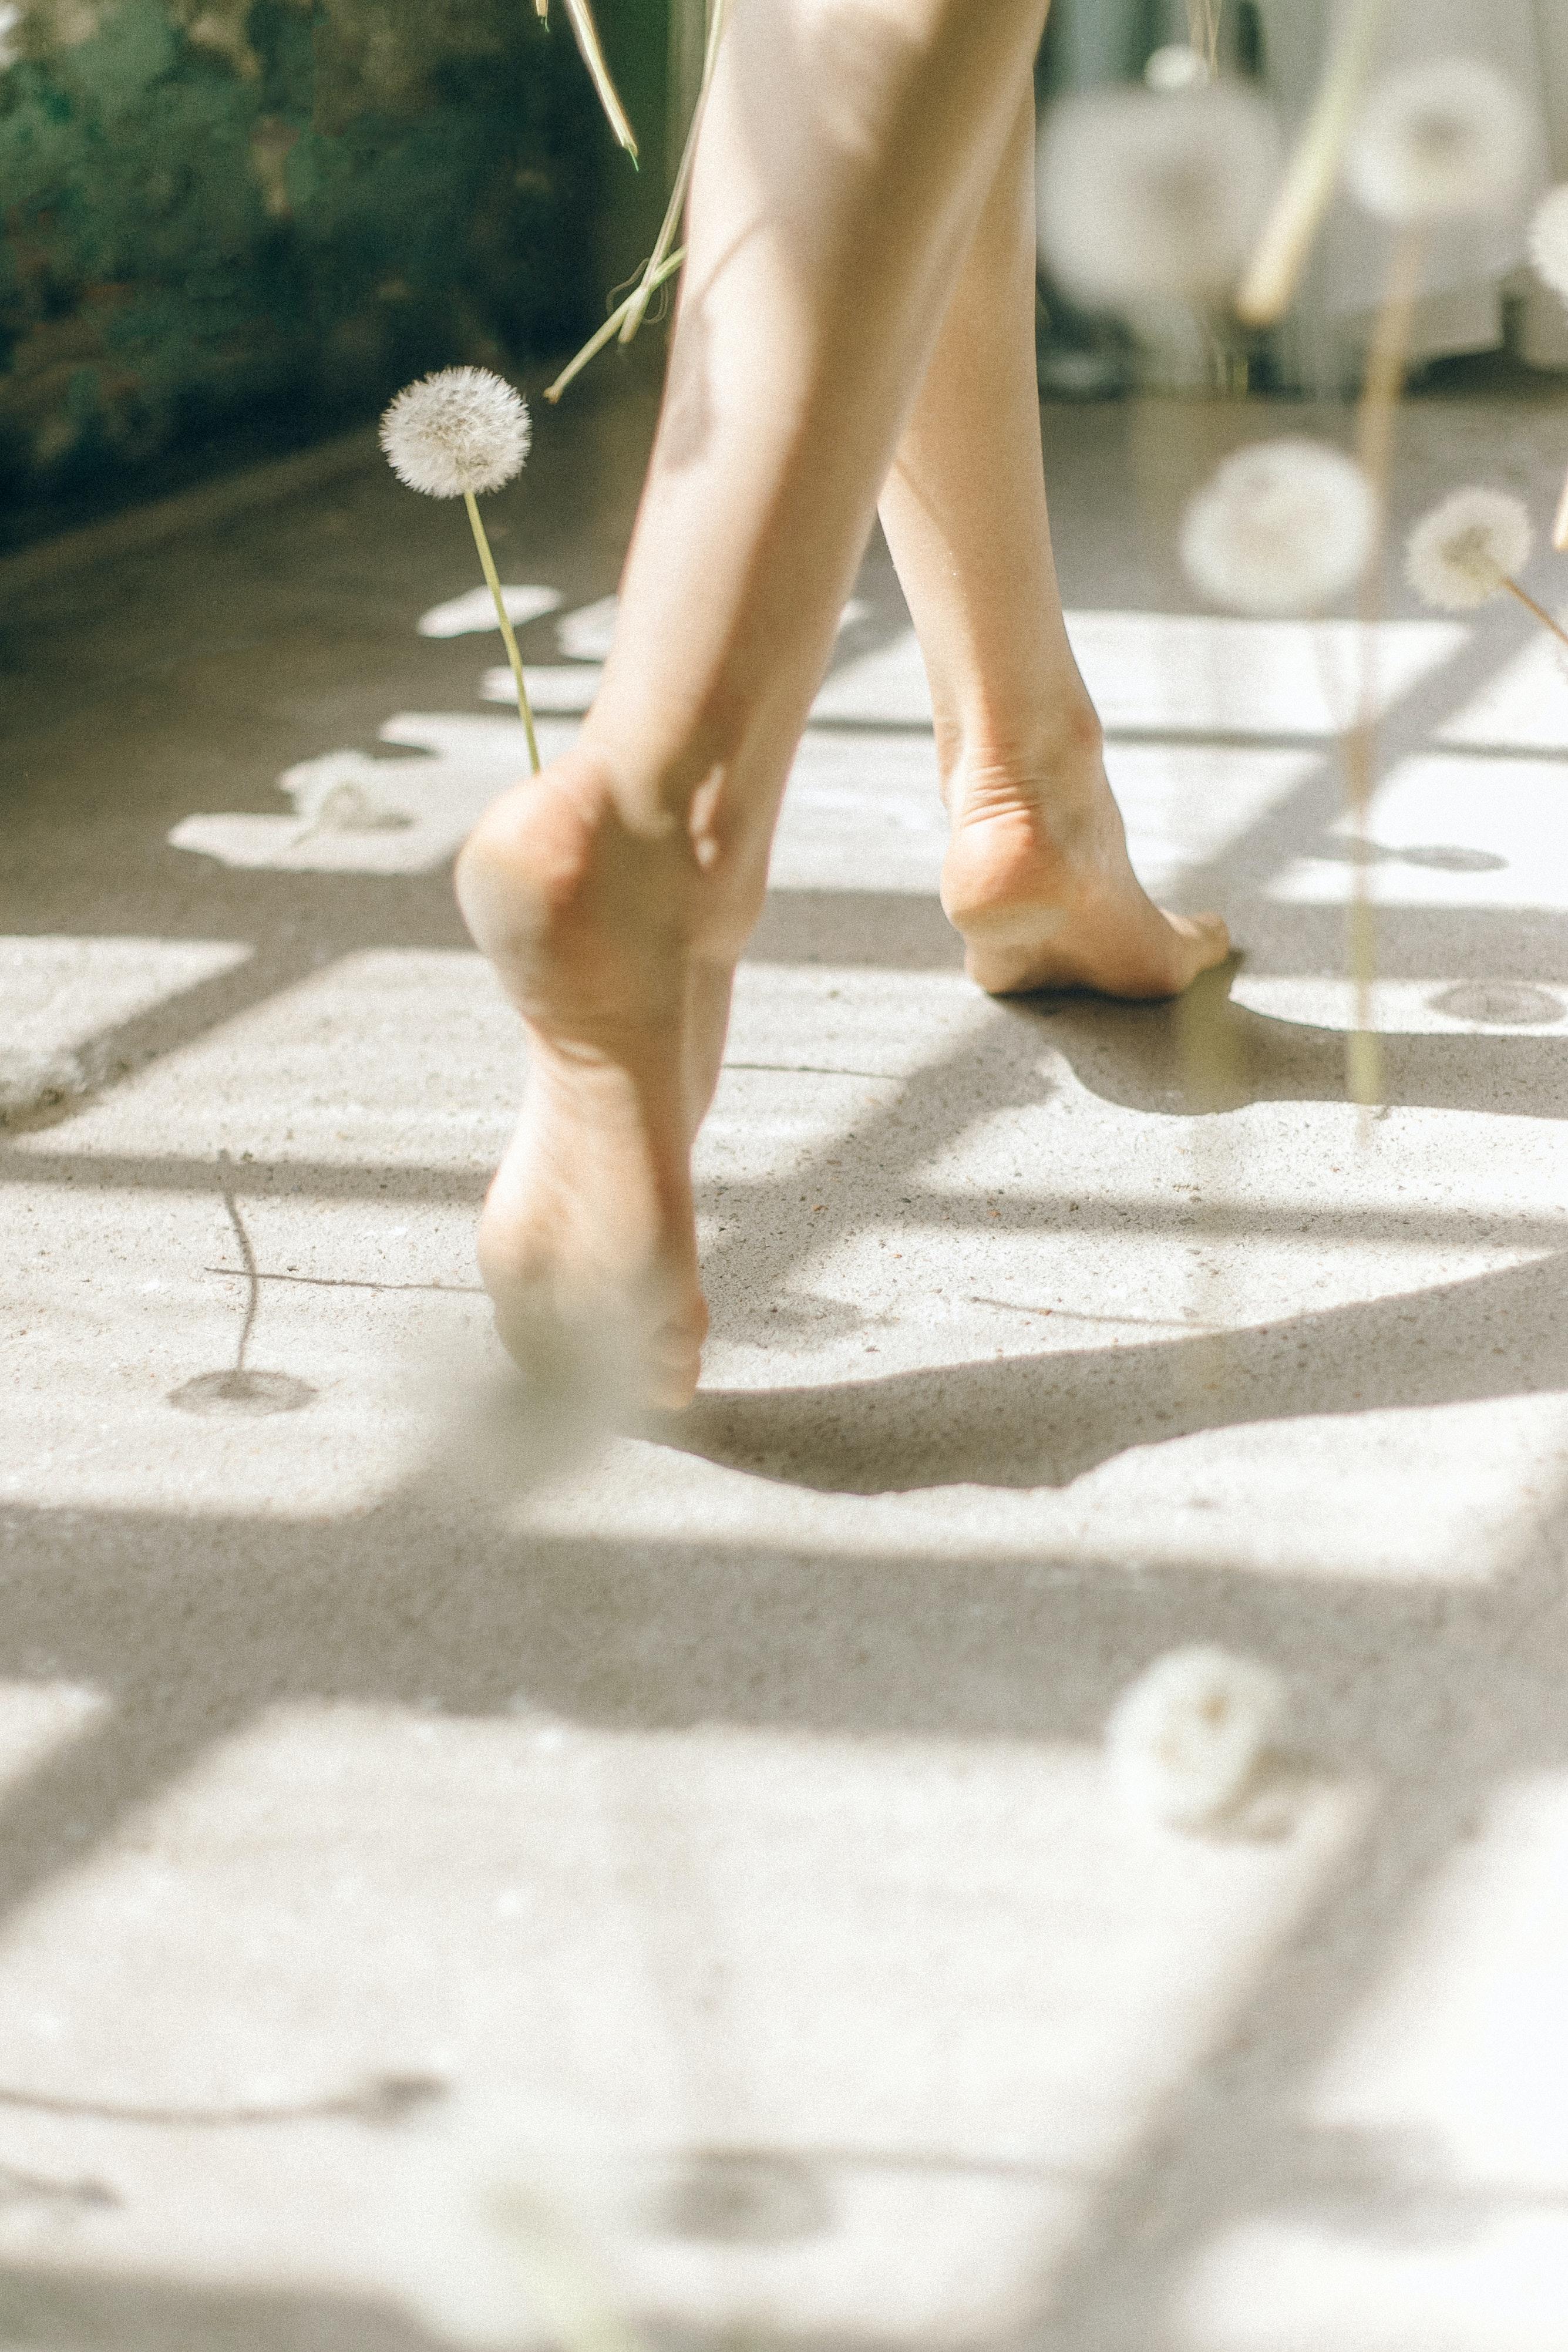 Does walking barefoot make your feet bigger? 